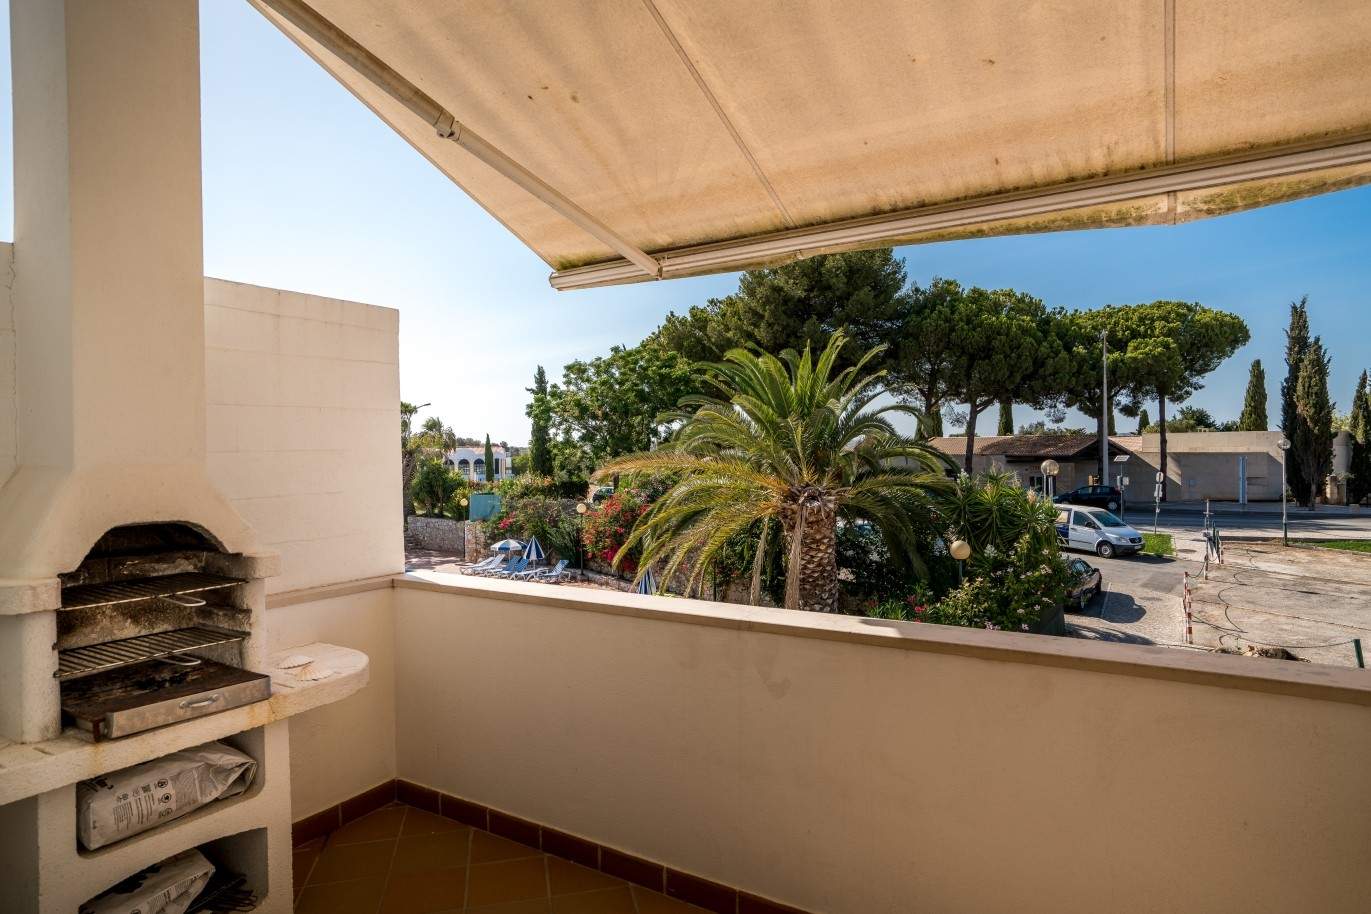 Apartment-triplex zum Verkauf in der Nähe zum Strand, Marina Vilamoura, Algarve, Portugal_67807